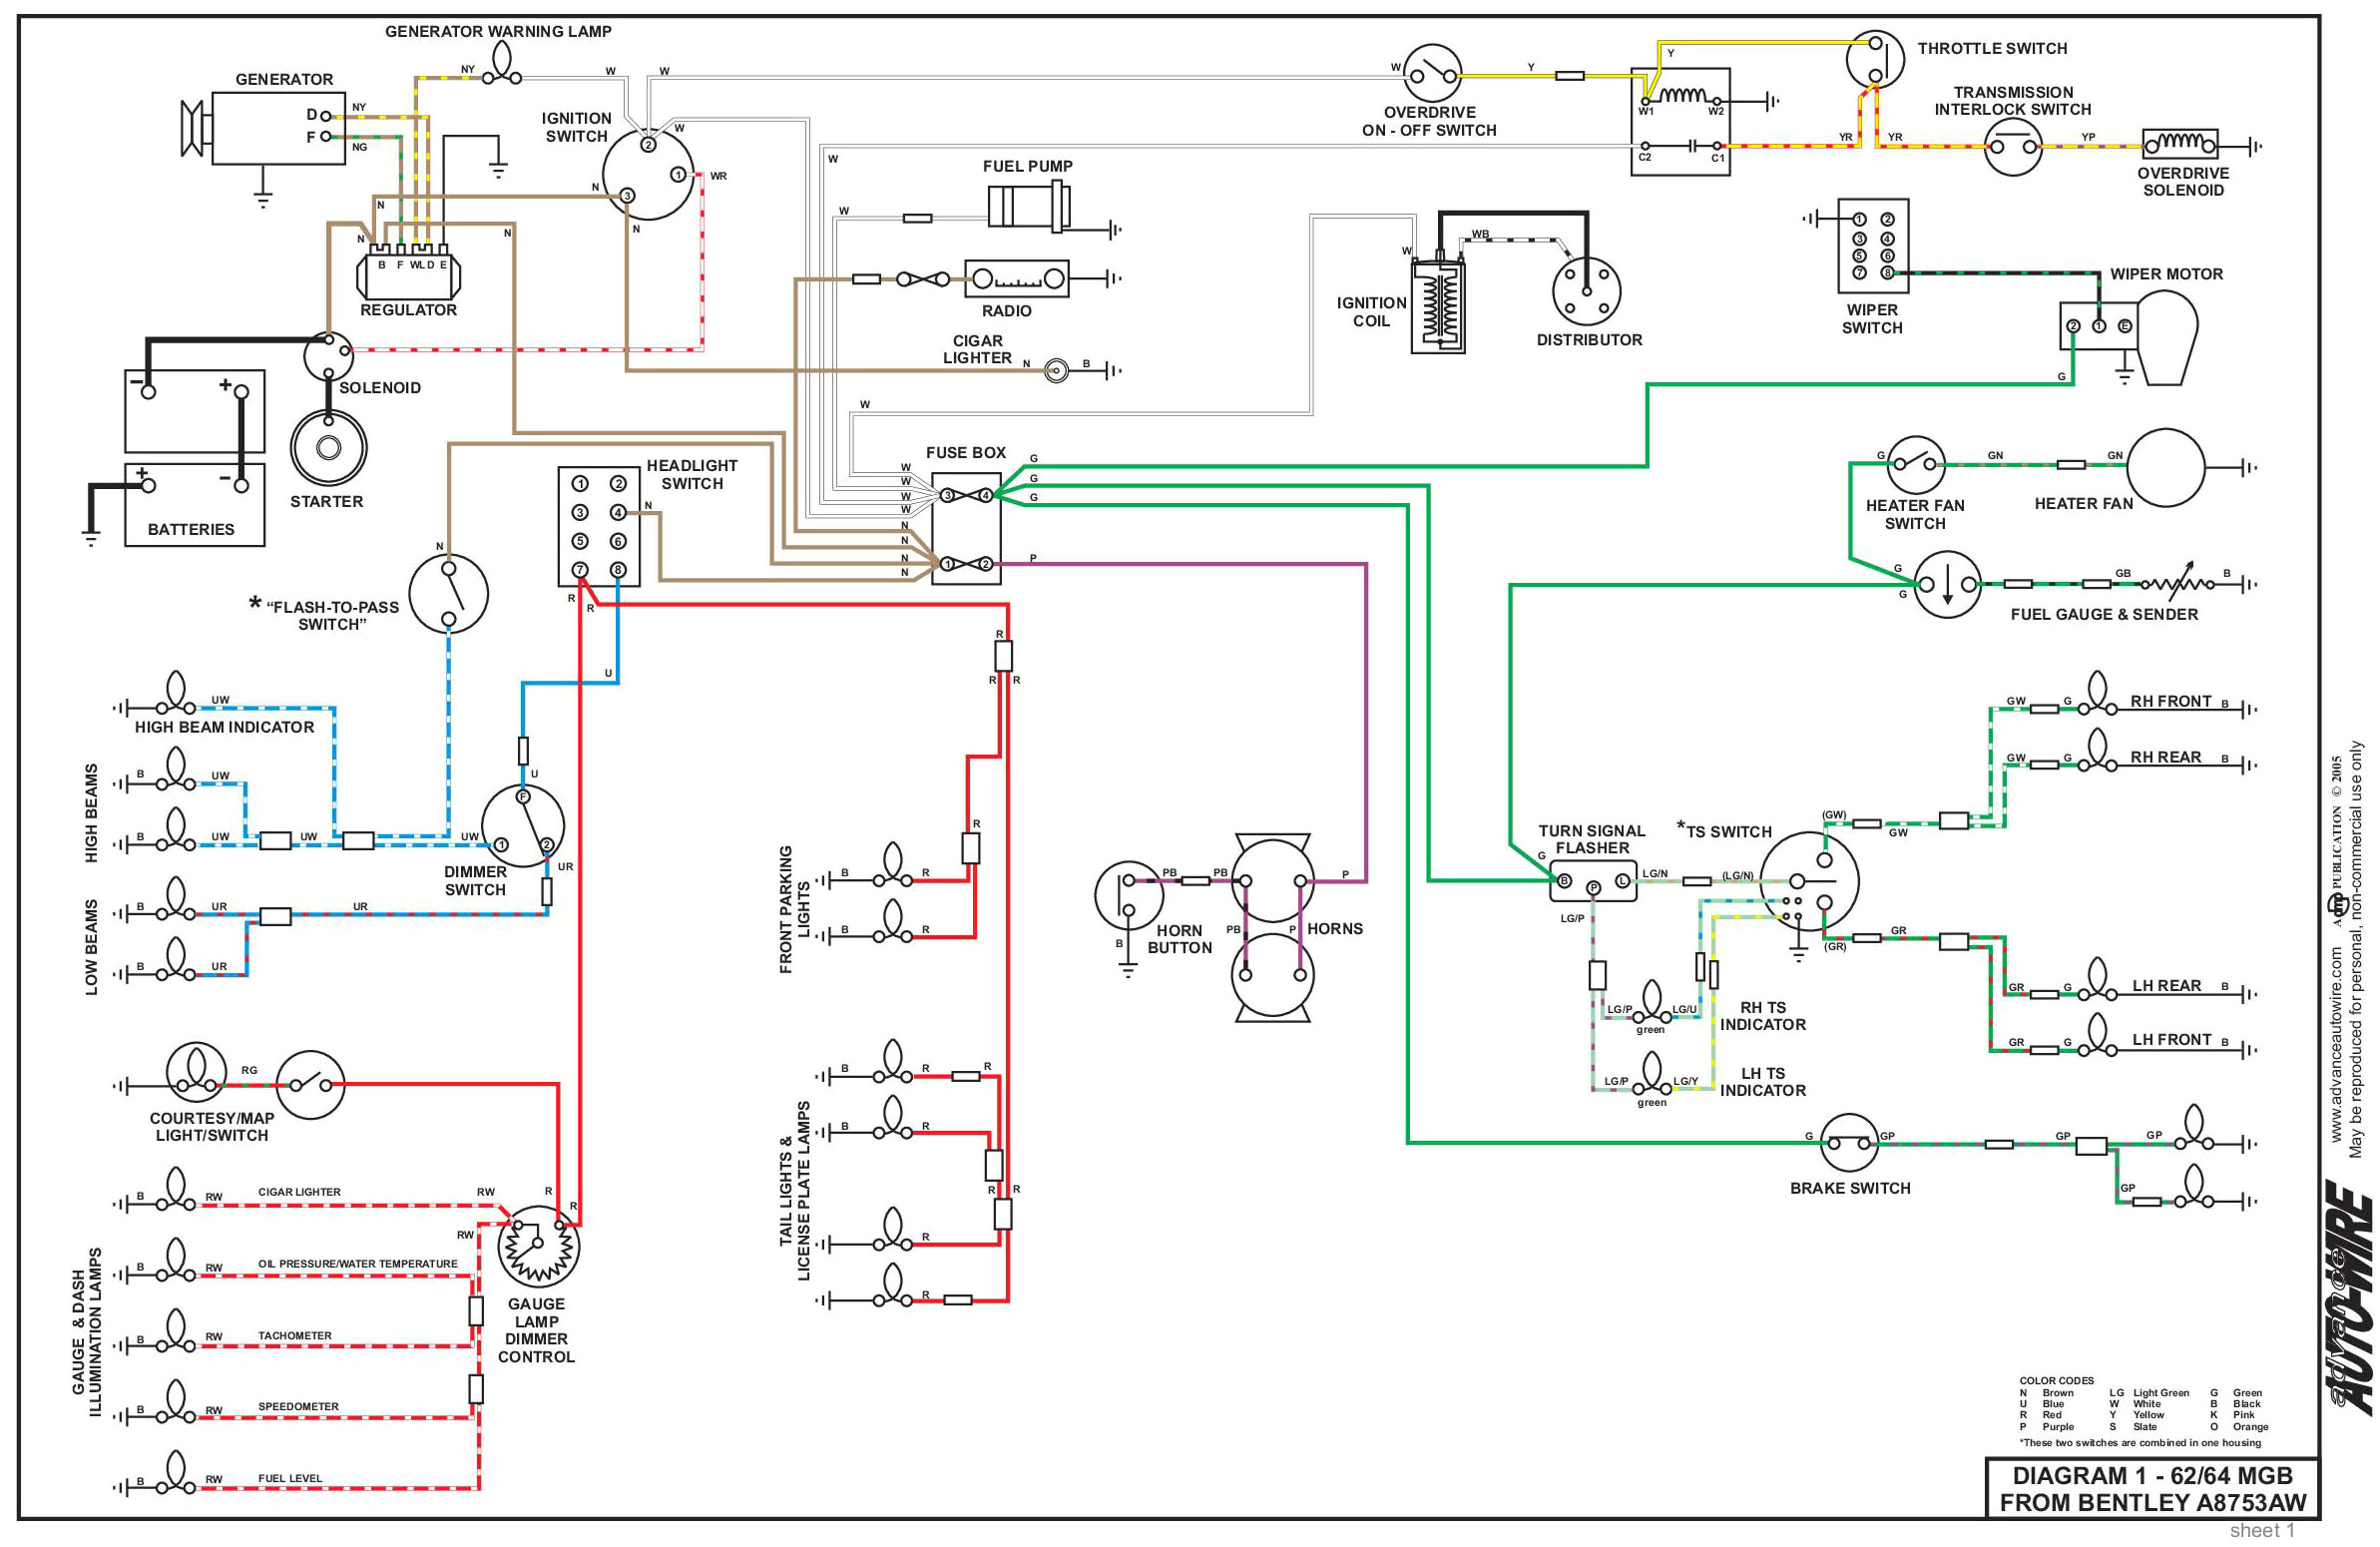 1973 mg mgb wiring diagram schematic my wiring diagram 1973 mg mgb wiring diagram